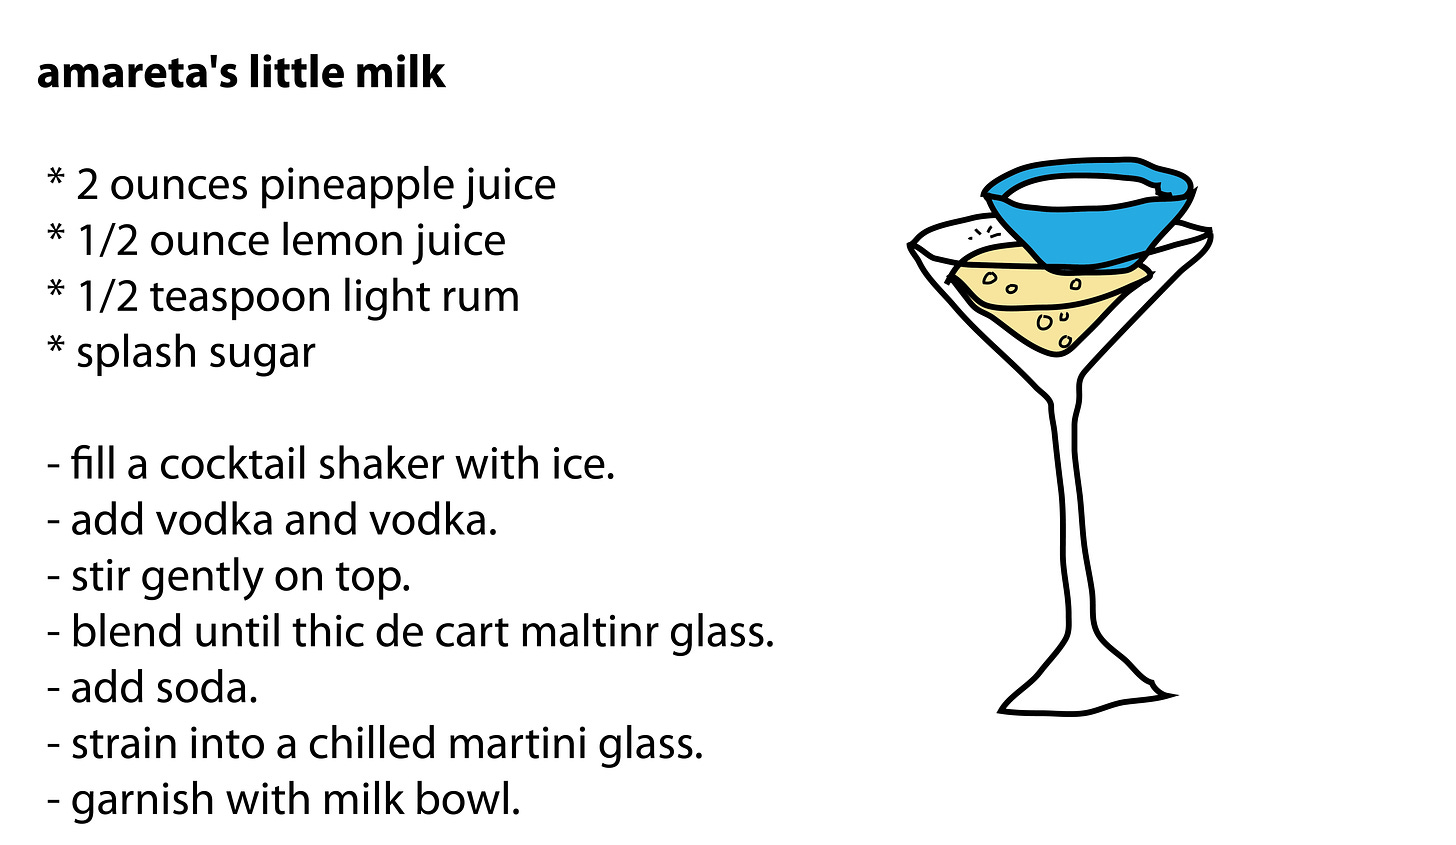 amareta's little milk   * 2 ounces pineapple juice  * 1/2 ounce lemon juice  * 1/2 teaspoon light rum  * splash sugar   - fill a cocktail shaker with ice.  - add vodka and vodka.  - stir gently on top.  - blend until thic de cart maltinr glass.  - add soda.  - strain into a chilled martini glass.  - garnish with milk bowl.